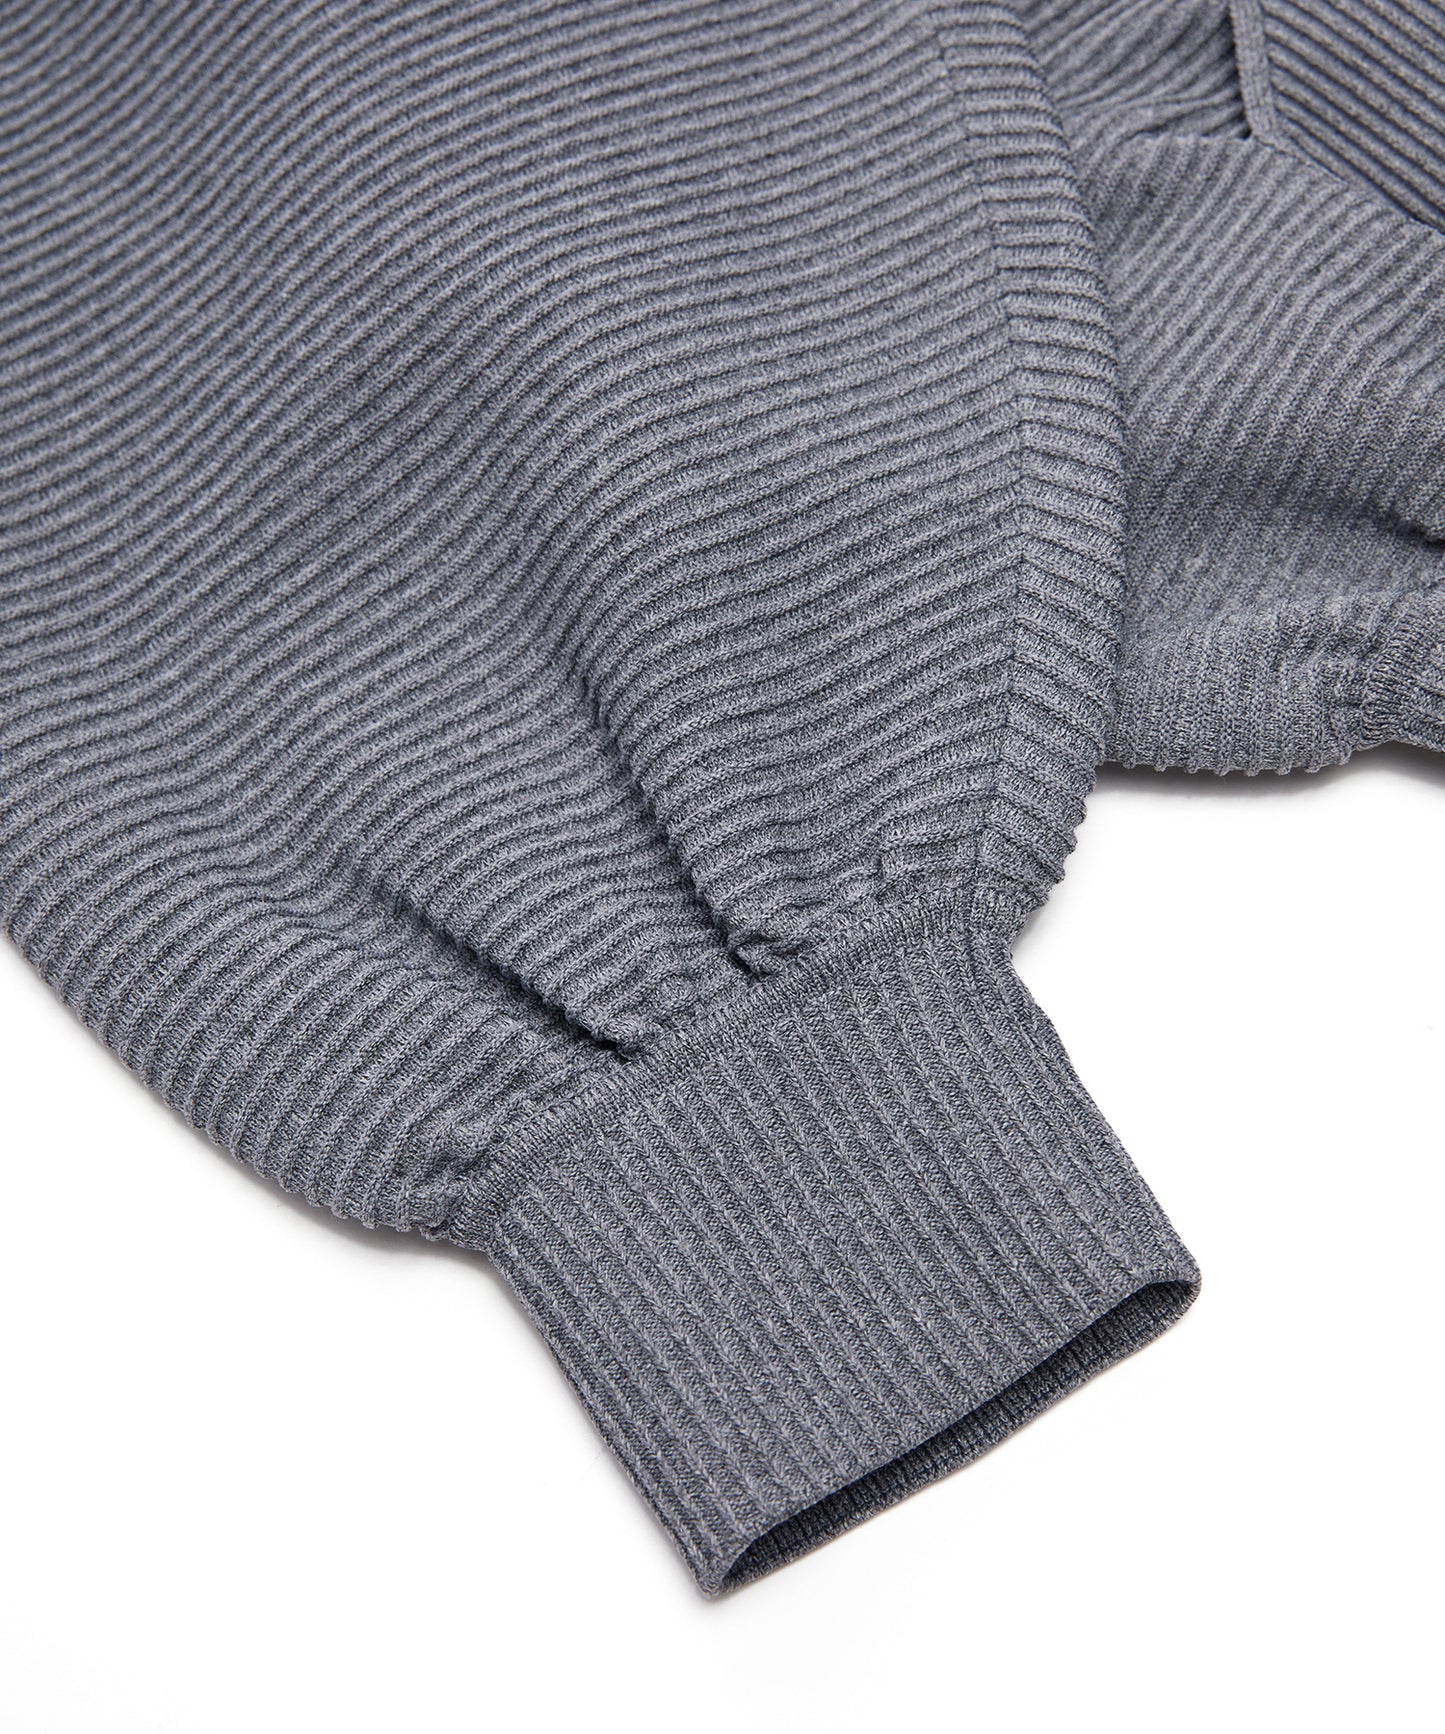 Comfort Hooded Knit Jacket